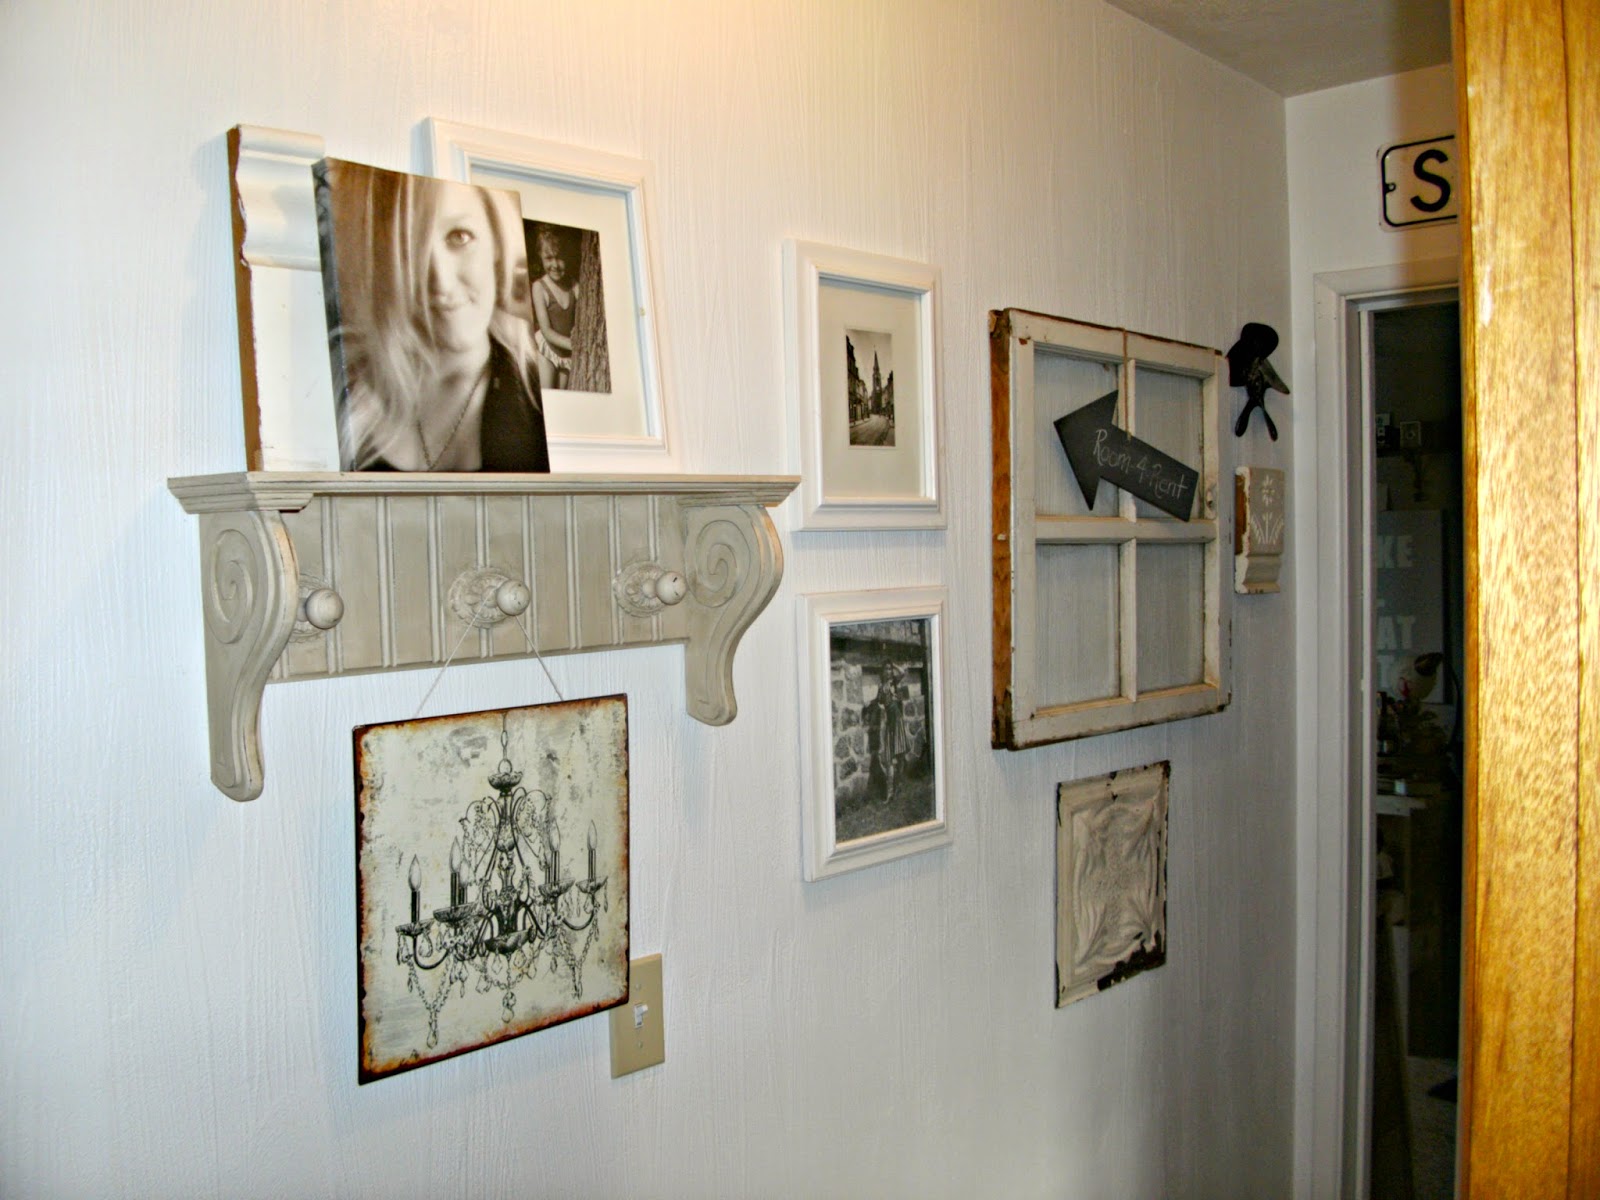 Hallway Gallery Wall - Little Vintage Cottage